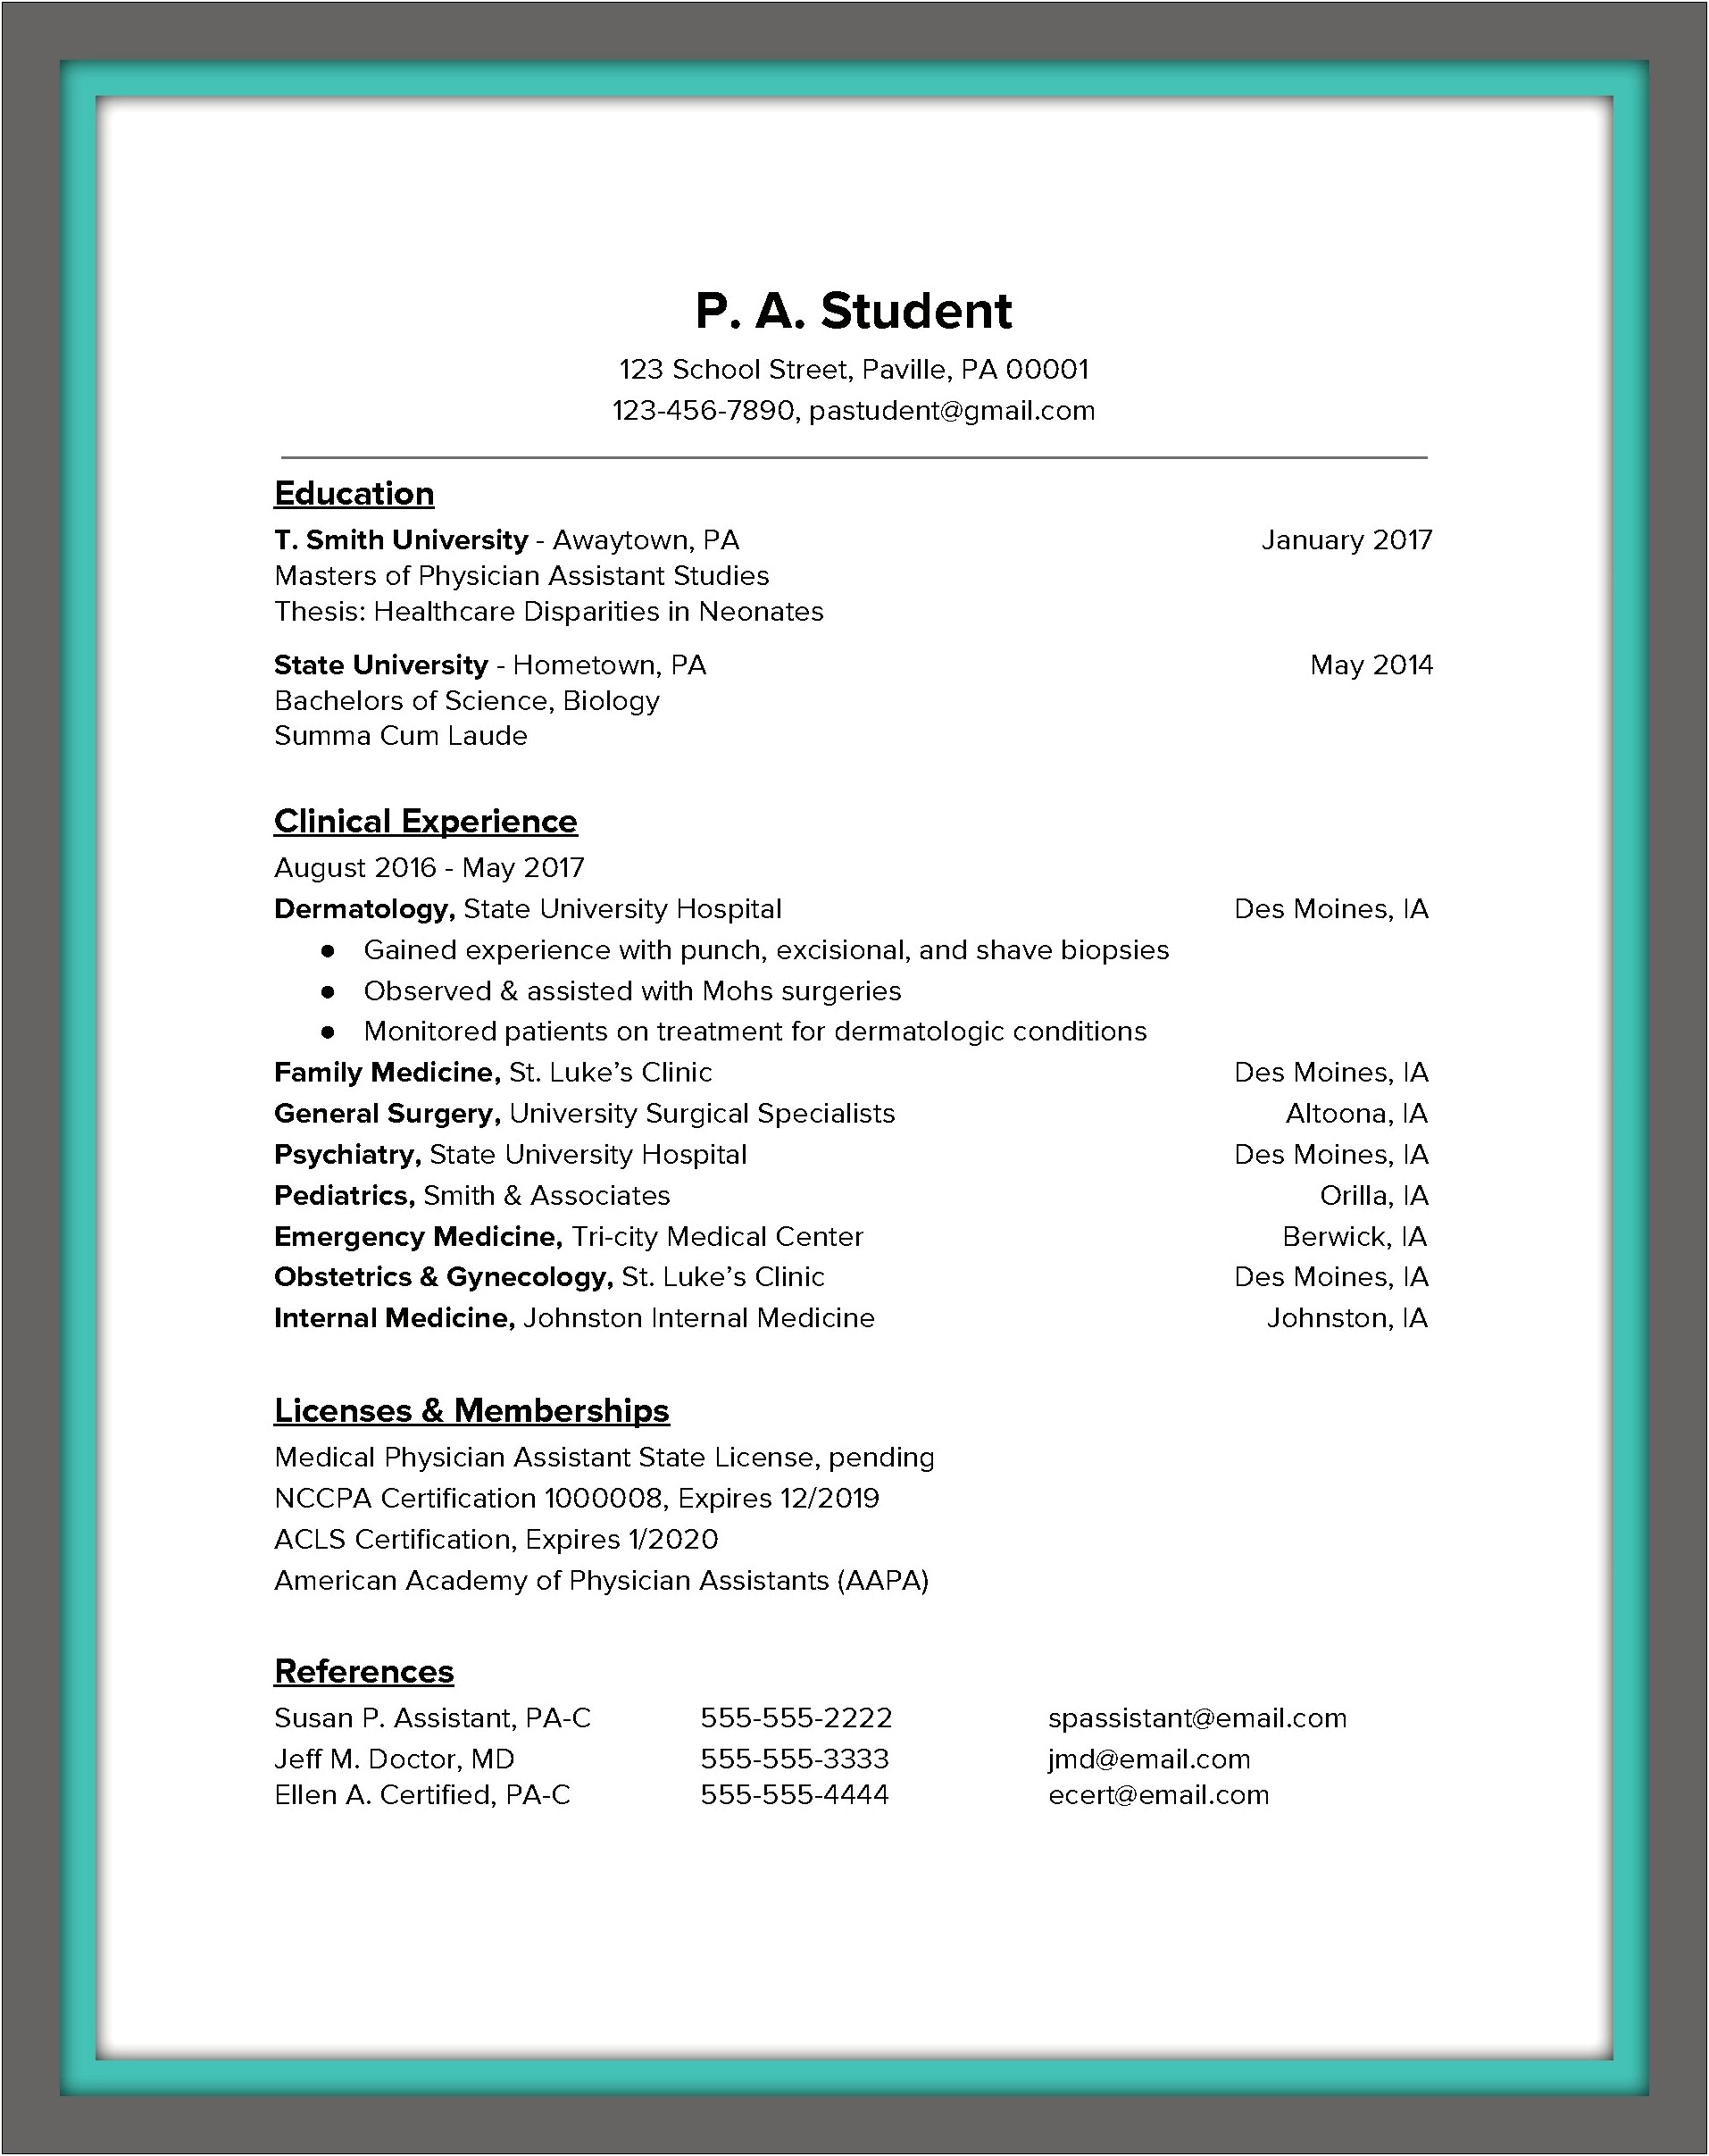 Graduate School Application Resume With Publication